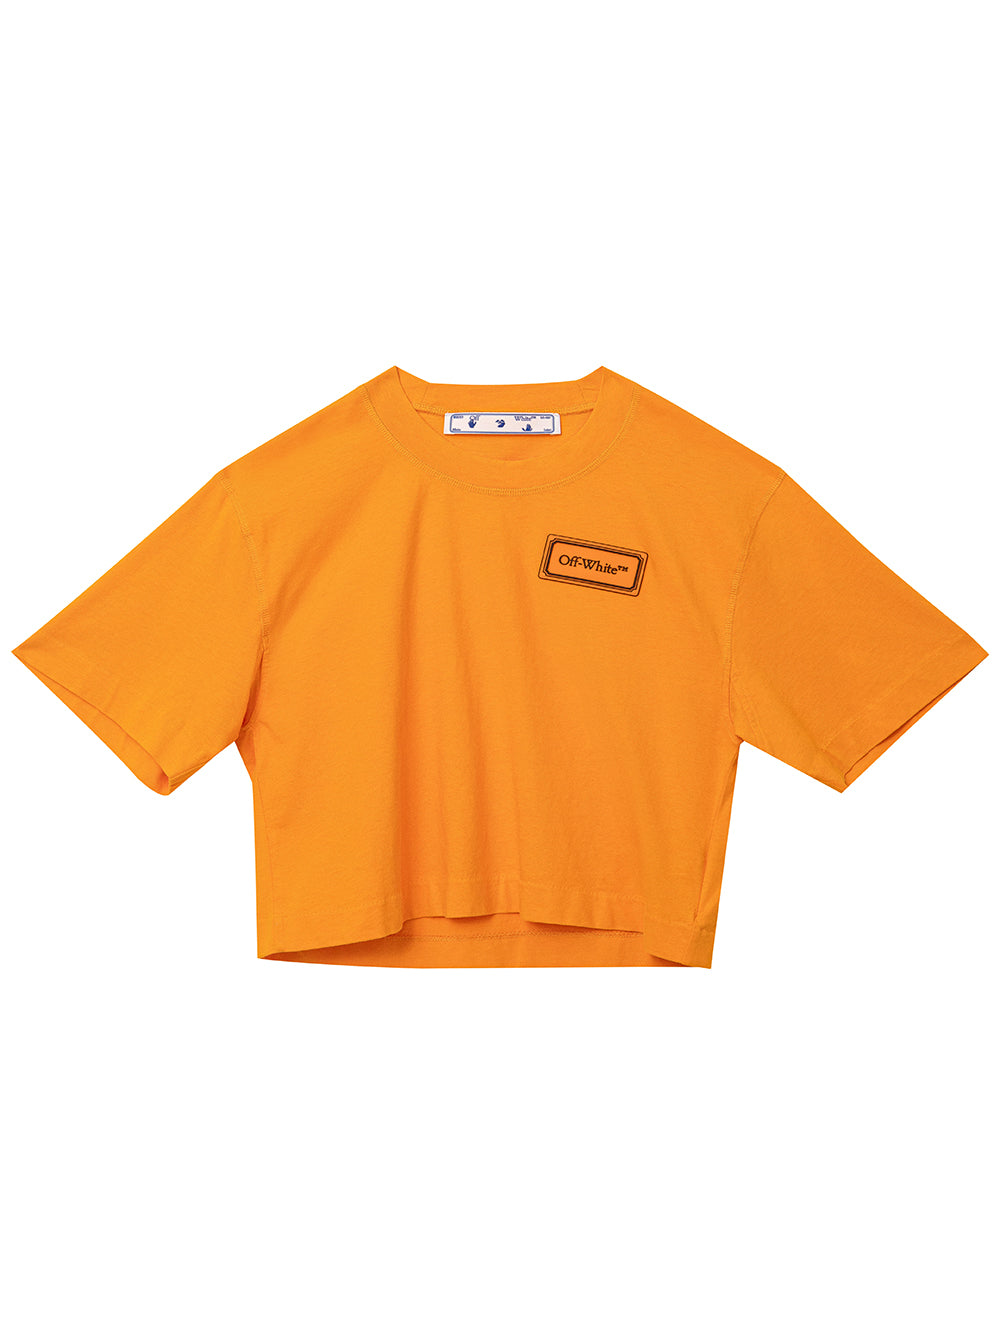 Off-White Orange Cropped T-Shirt